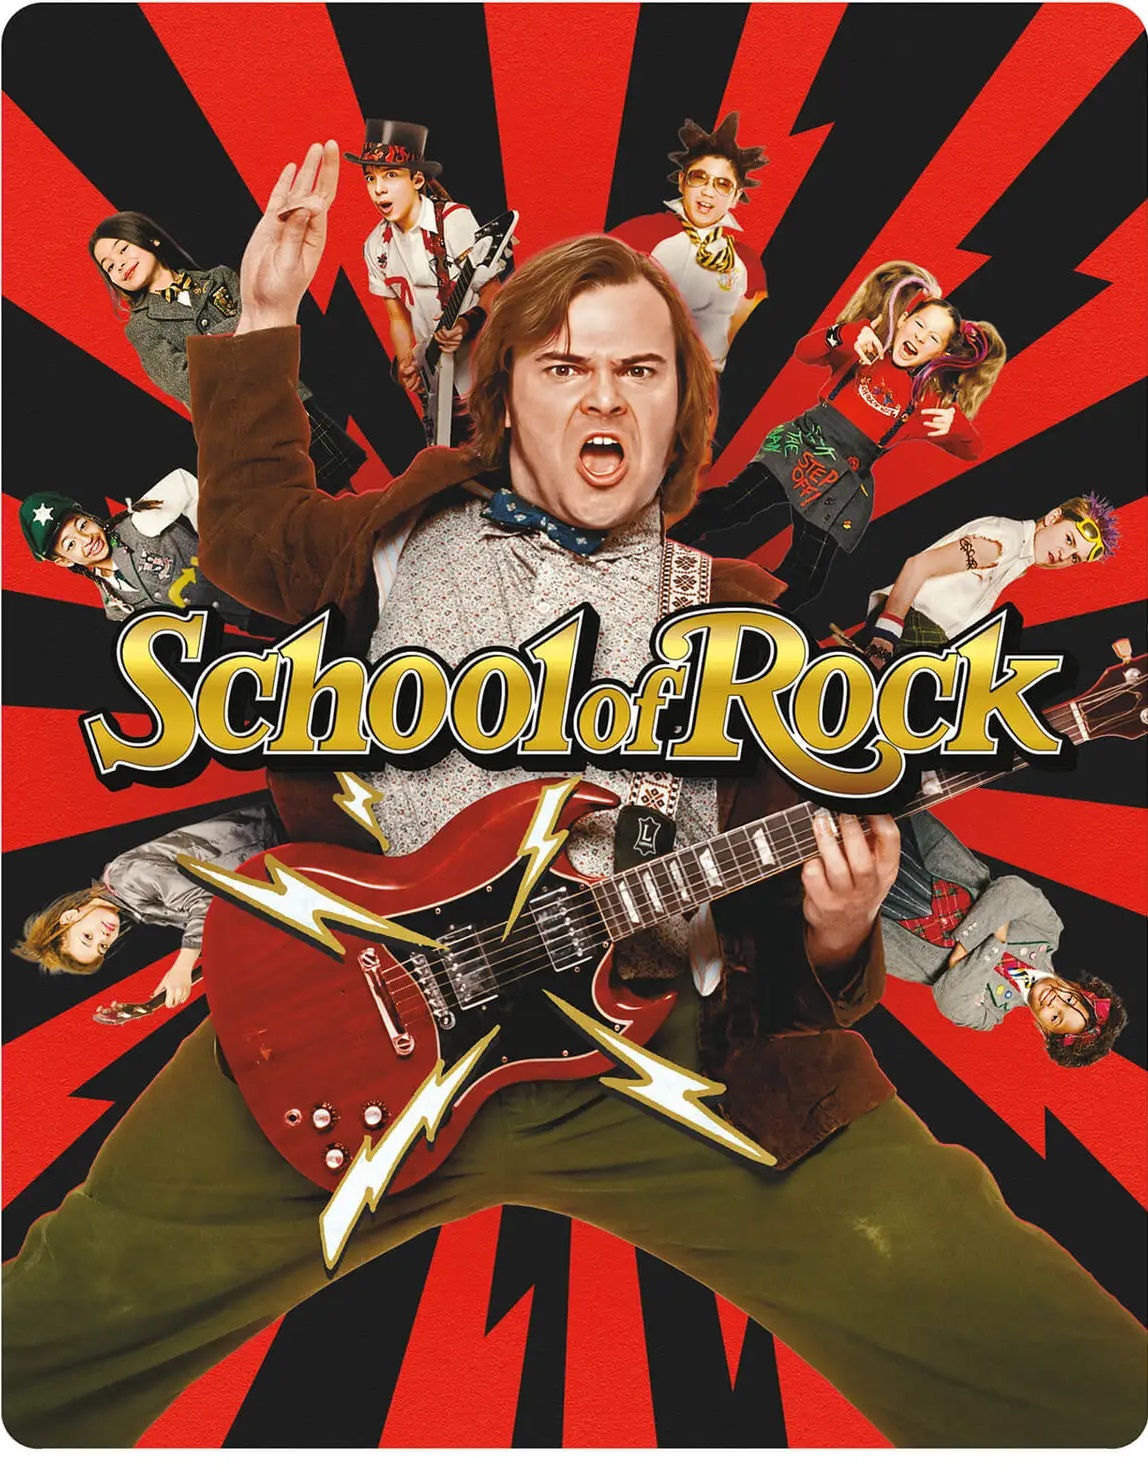 School of Rock' Cast: Jack Black, Joan Cusack, More